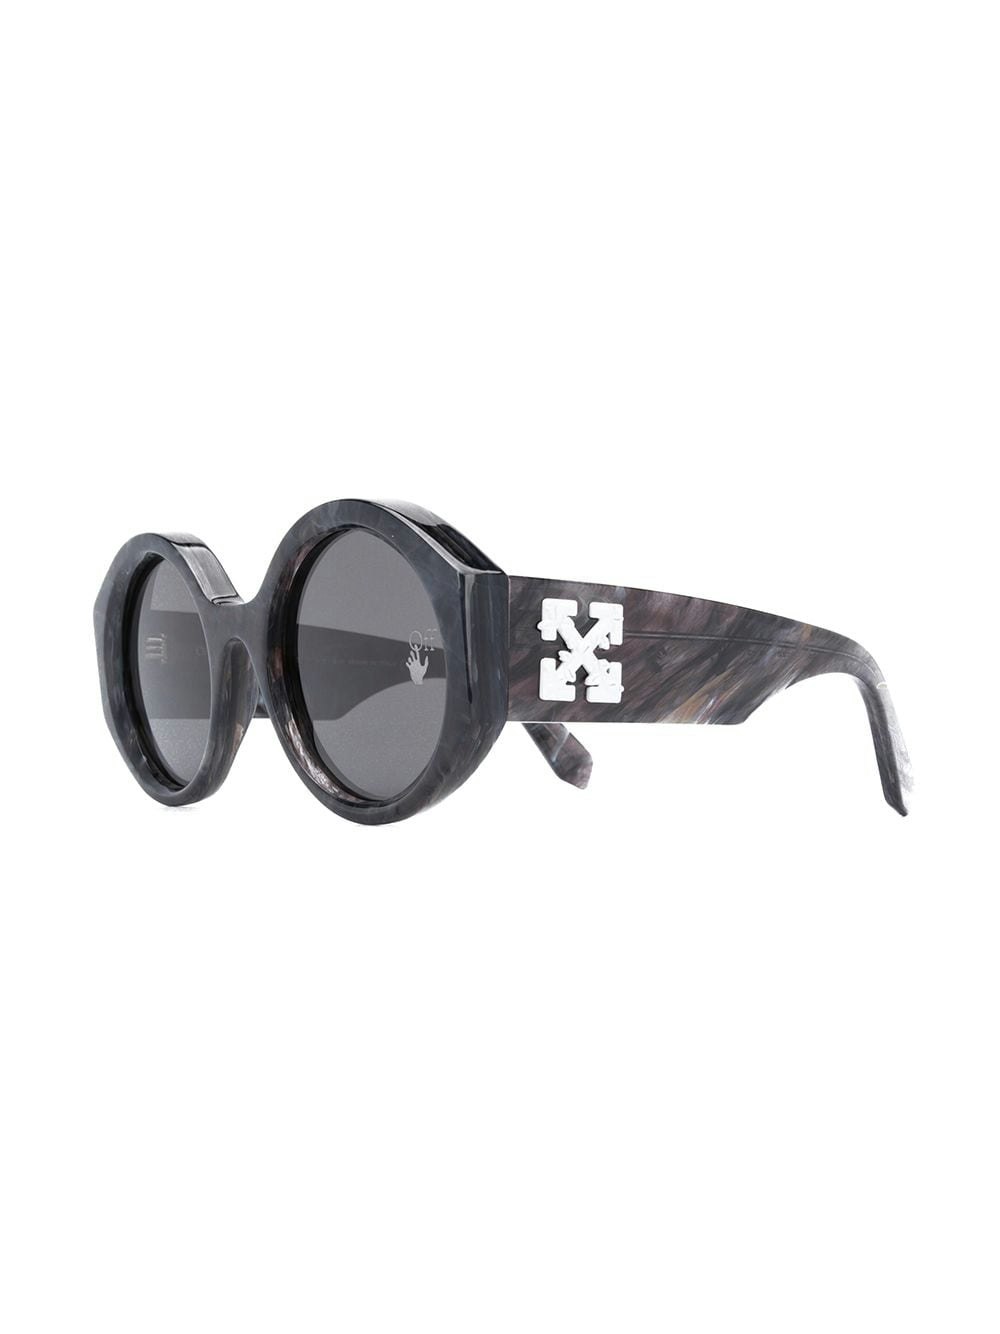 C2Hot Sale Brand SARA Sunglasses Men Women Fashion Pretty Happy with Sun Glasses  Eyewear Unisex Gafas Oculos De Sol